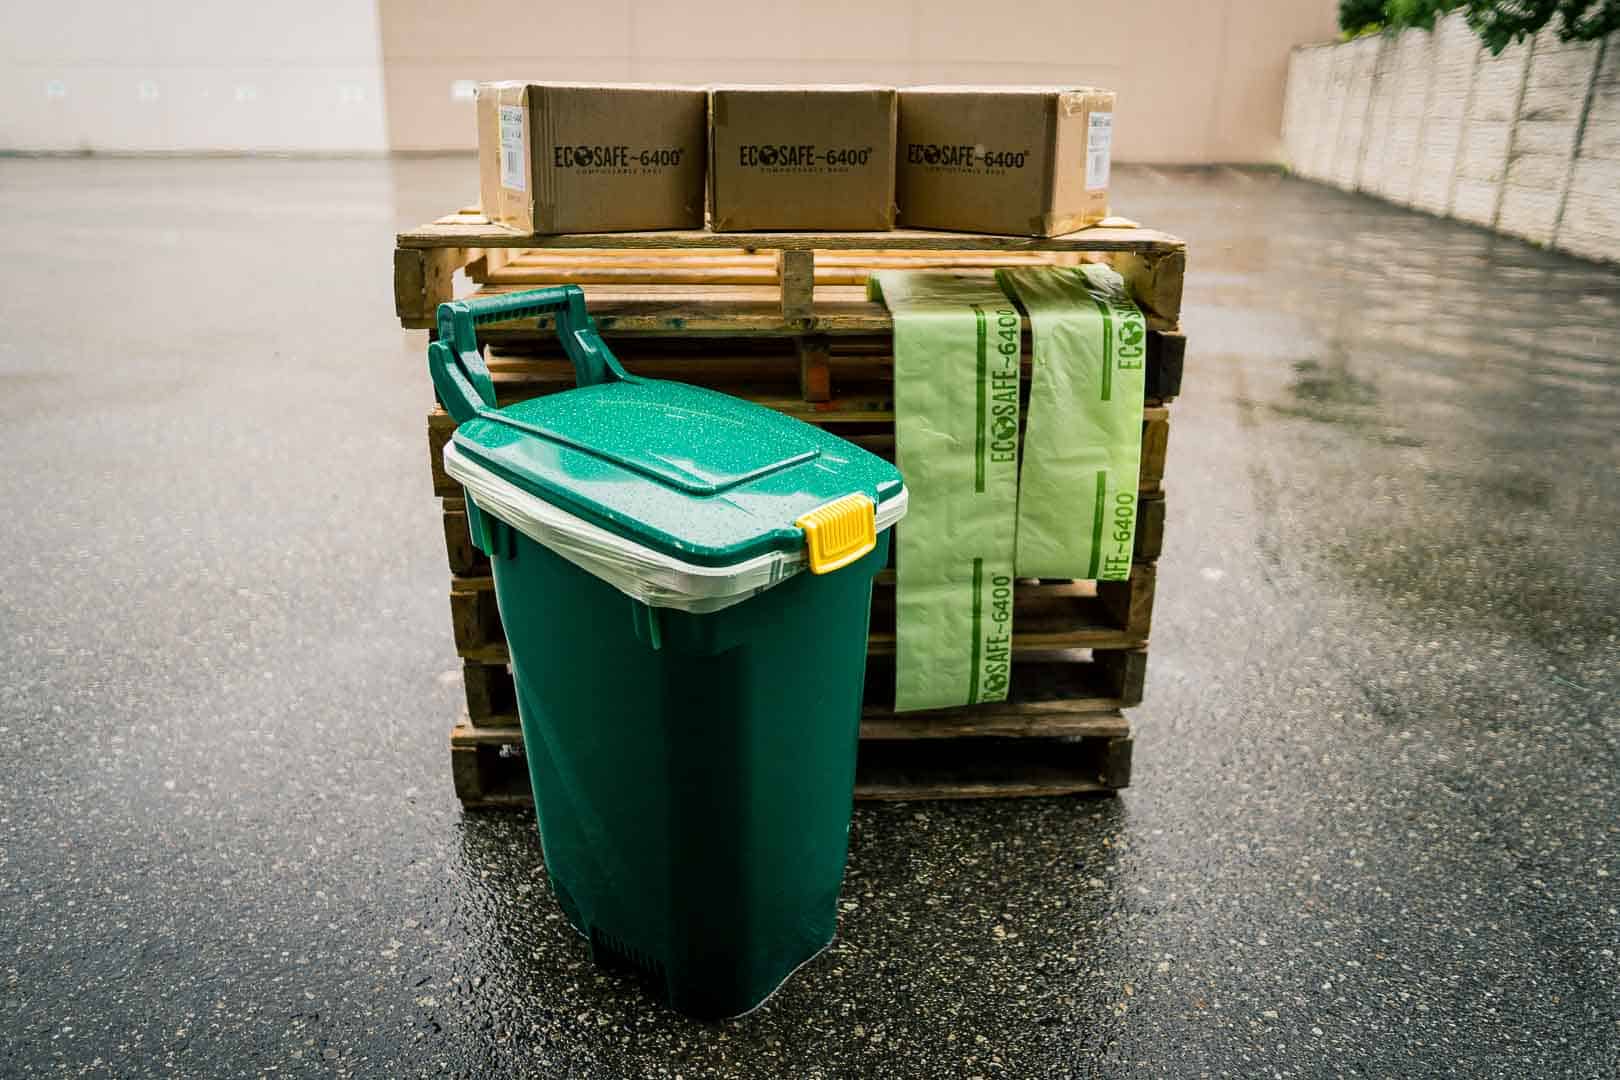 Ecosafe Green | Zero waste - bin